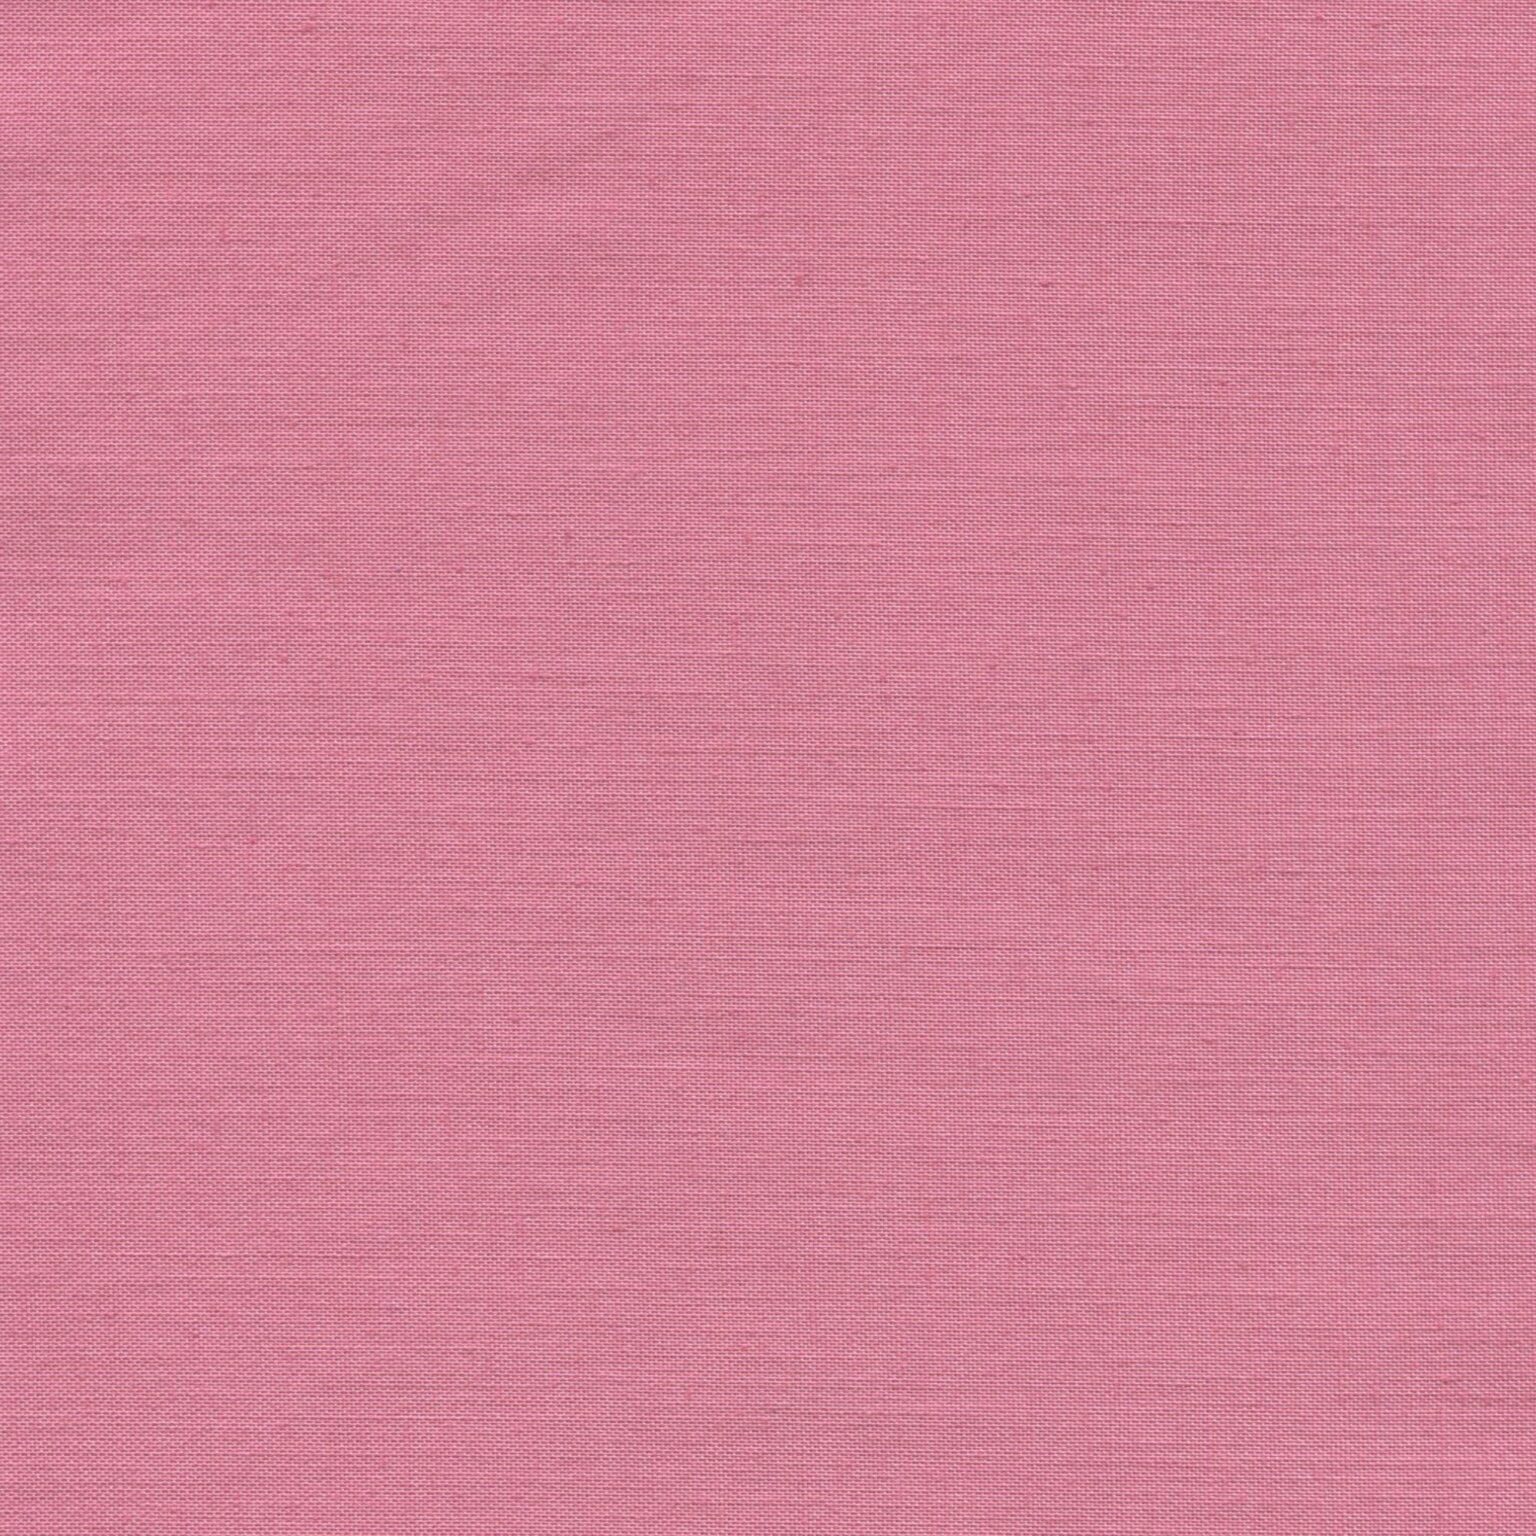 rose pink cotton fabric